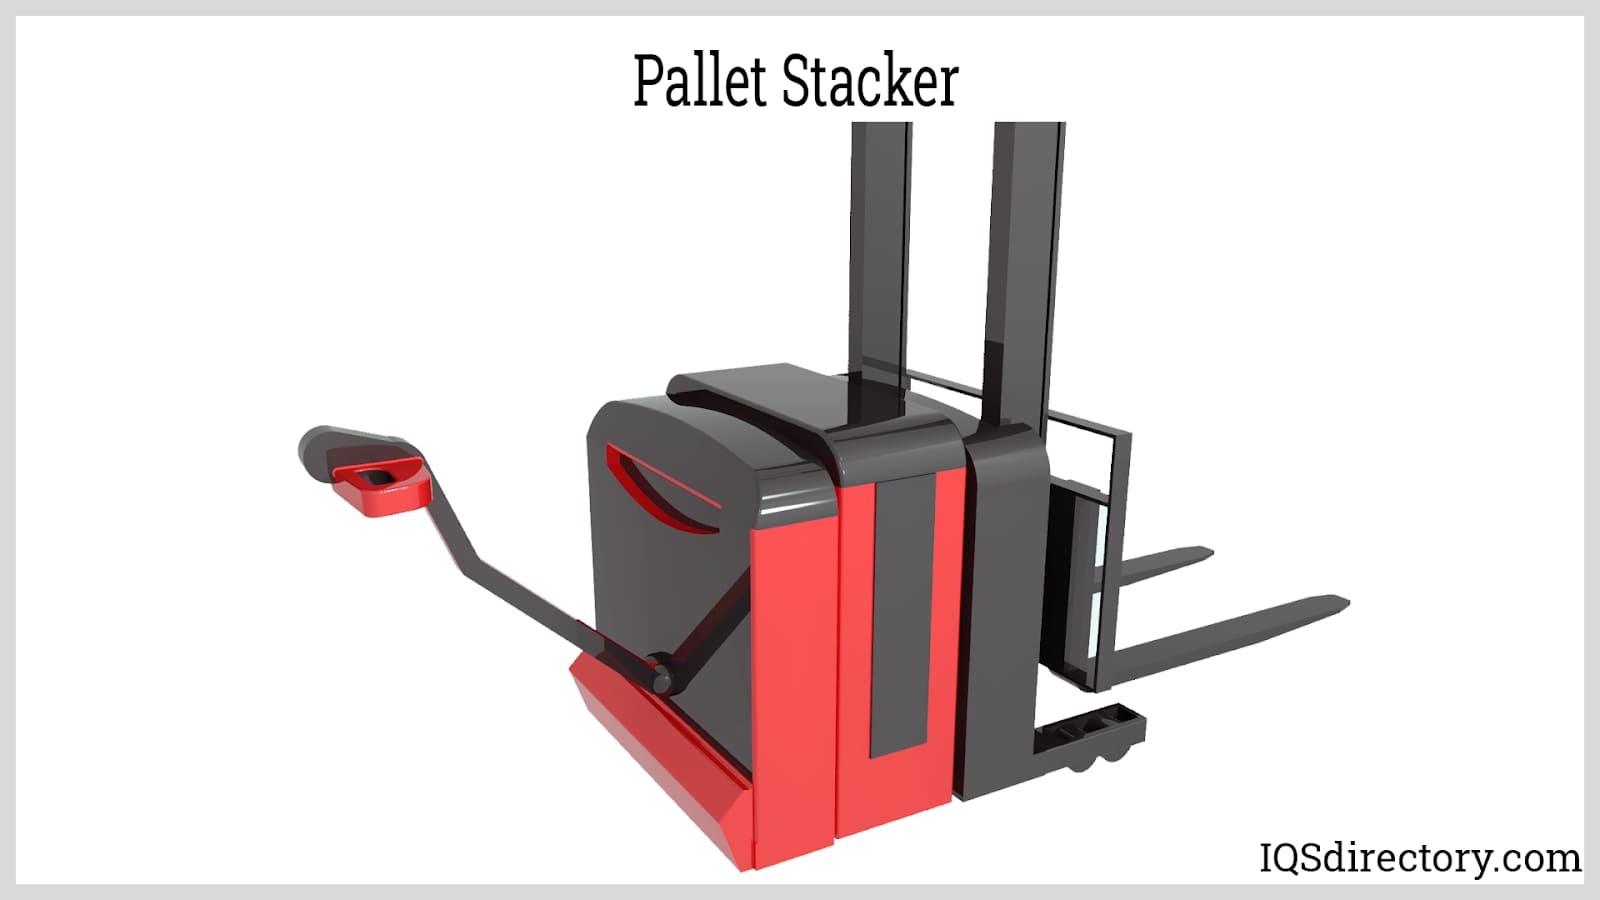 Pallet Handling - An operator's guide to pallet handling